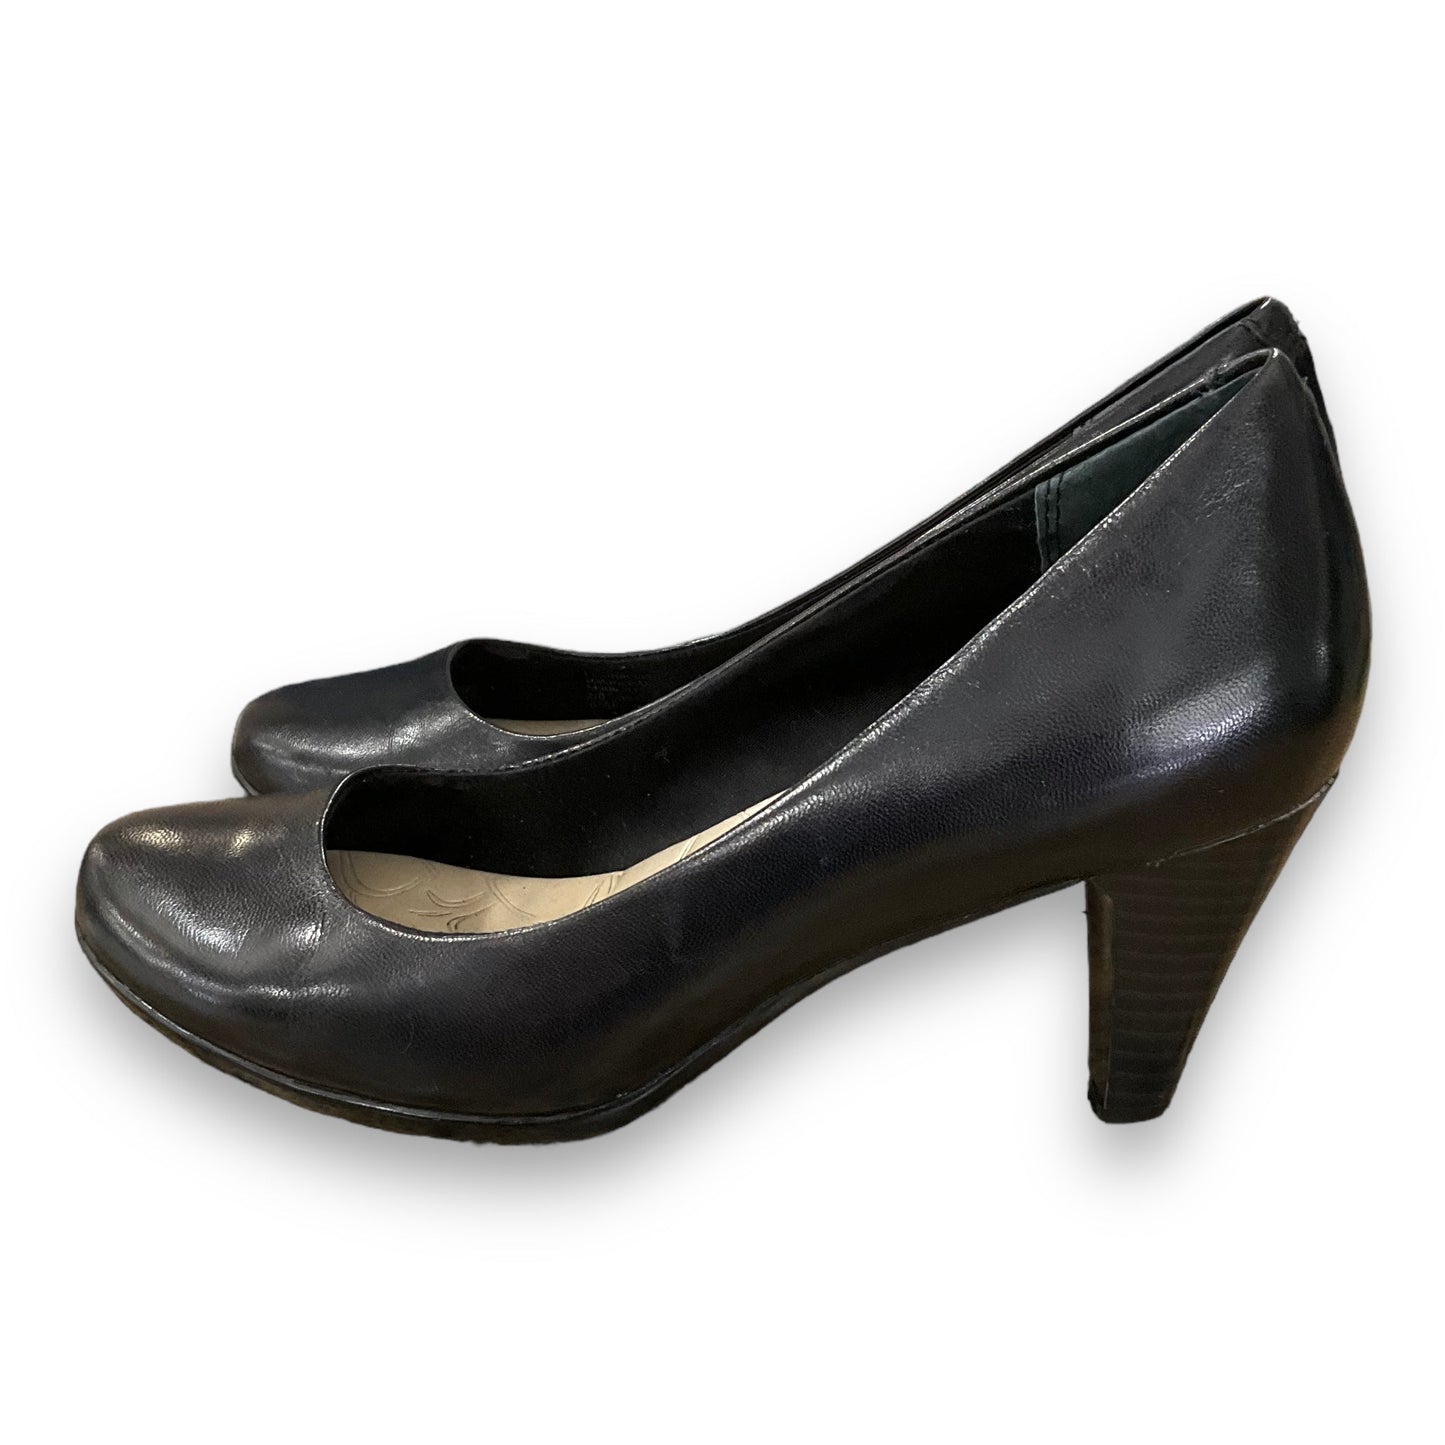 Shoes Heels Stiletto By Giani Bernini  Size: 6.5